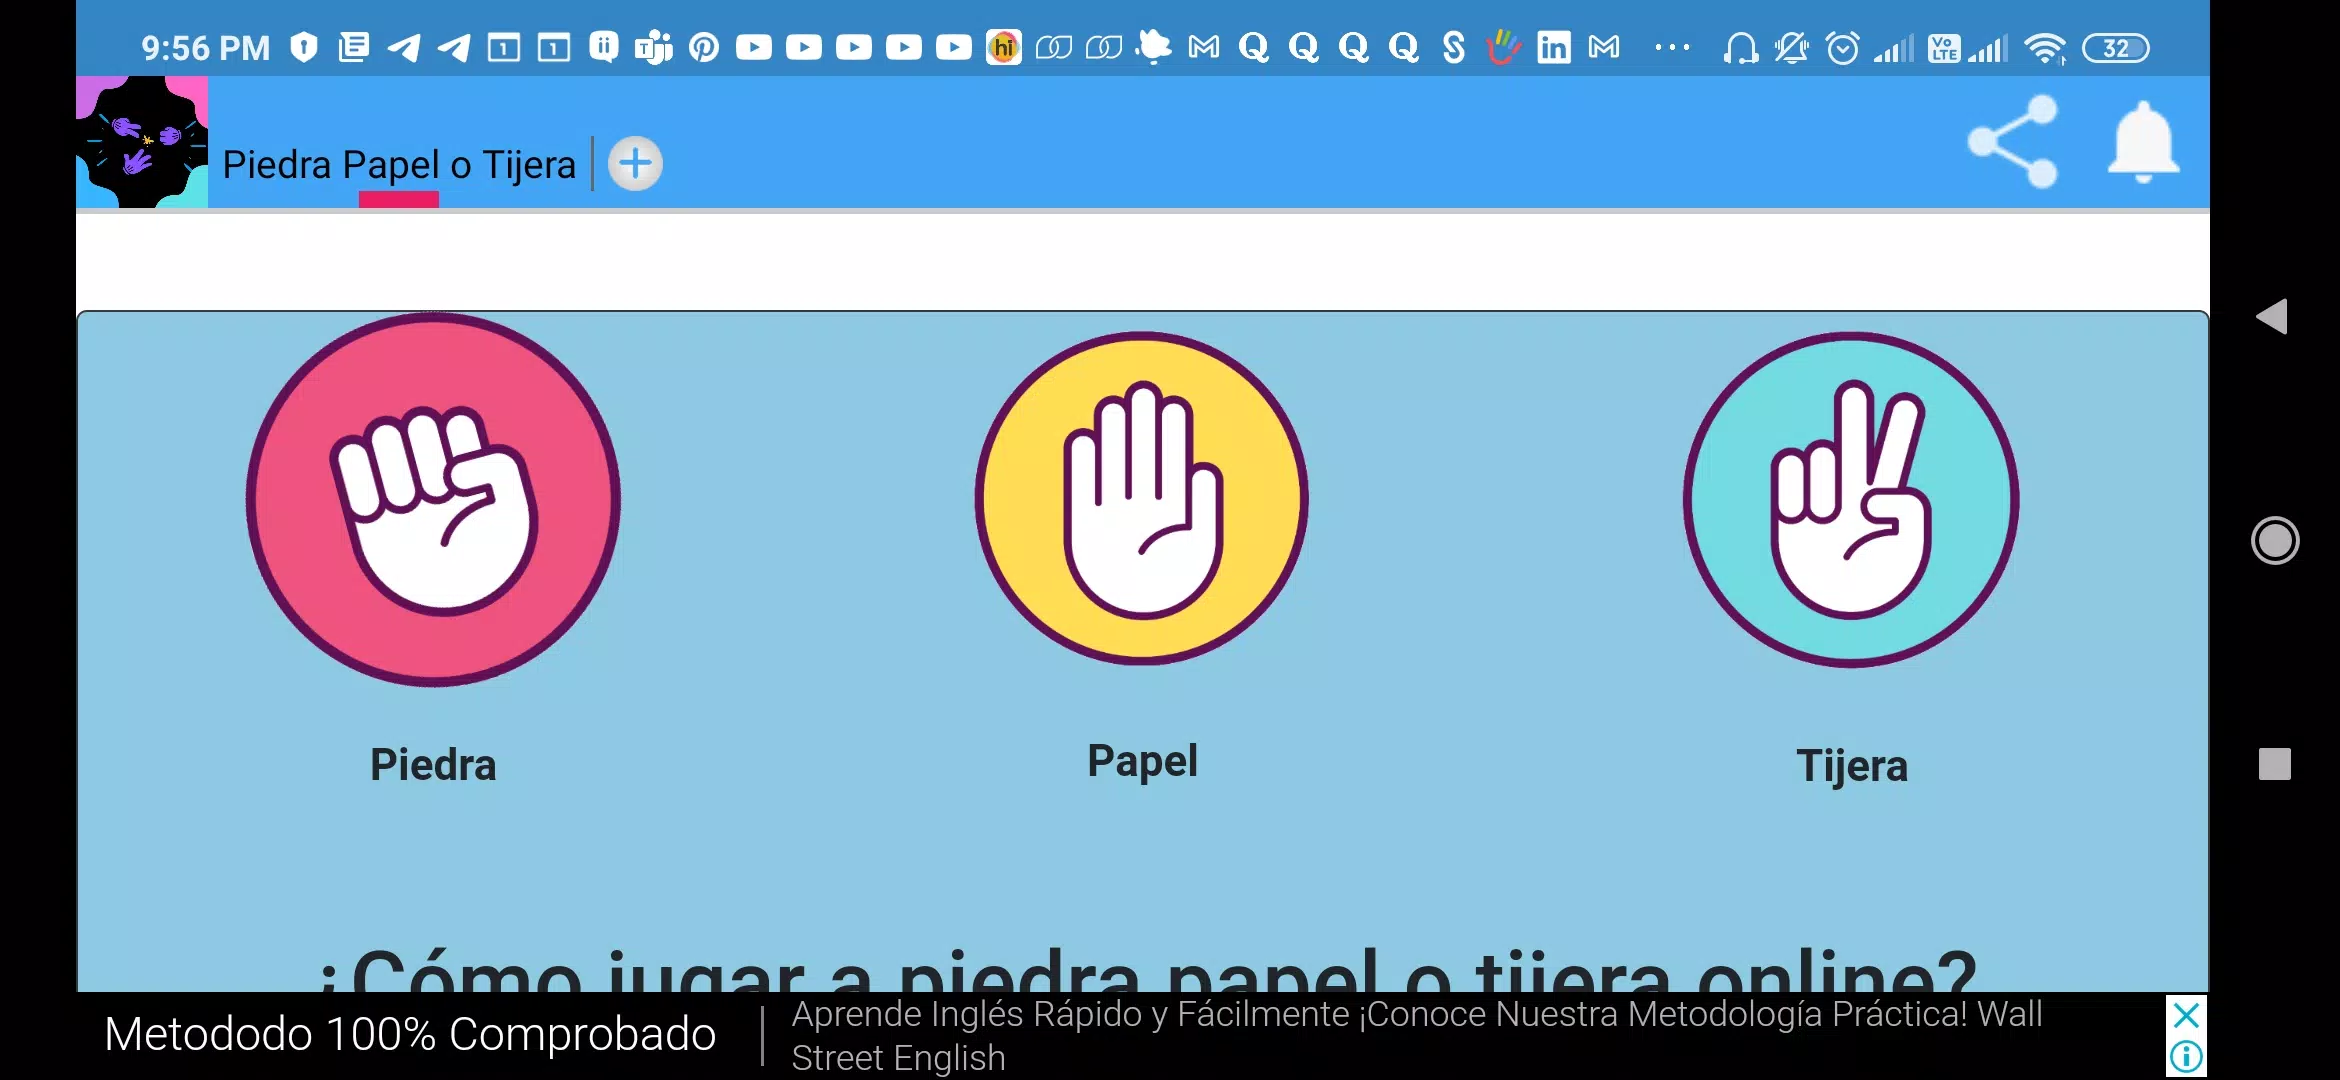 Piedra Papel o Tijera Online APK für Android herunterladen